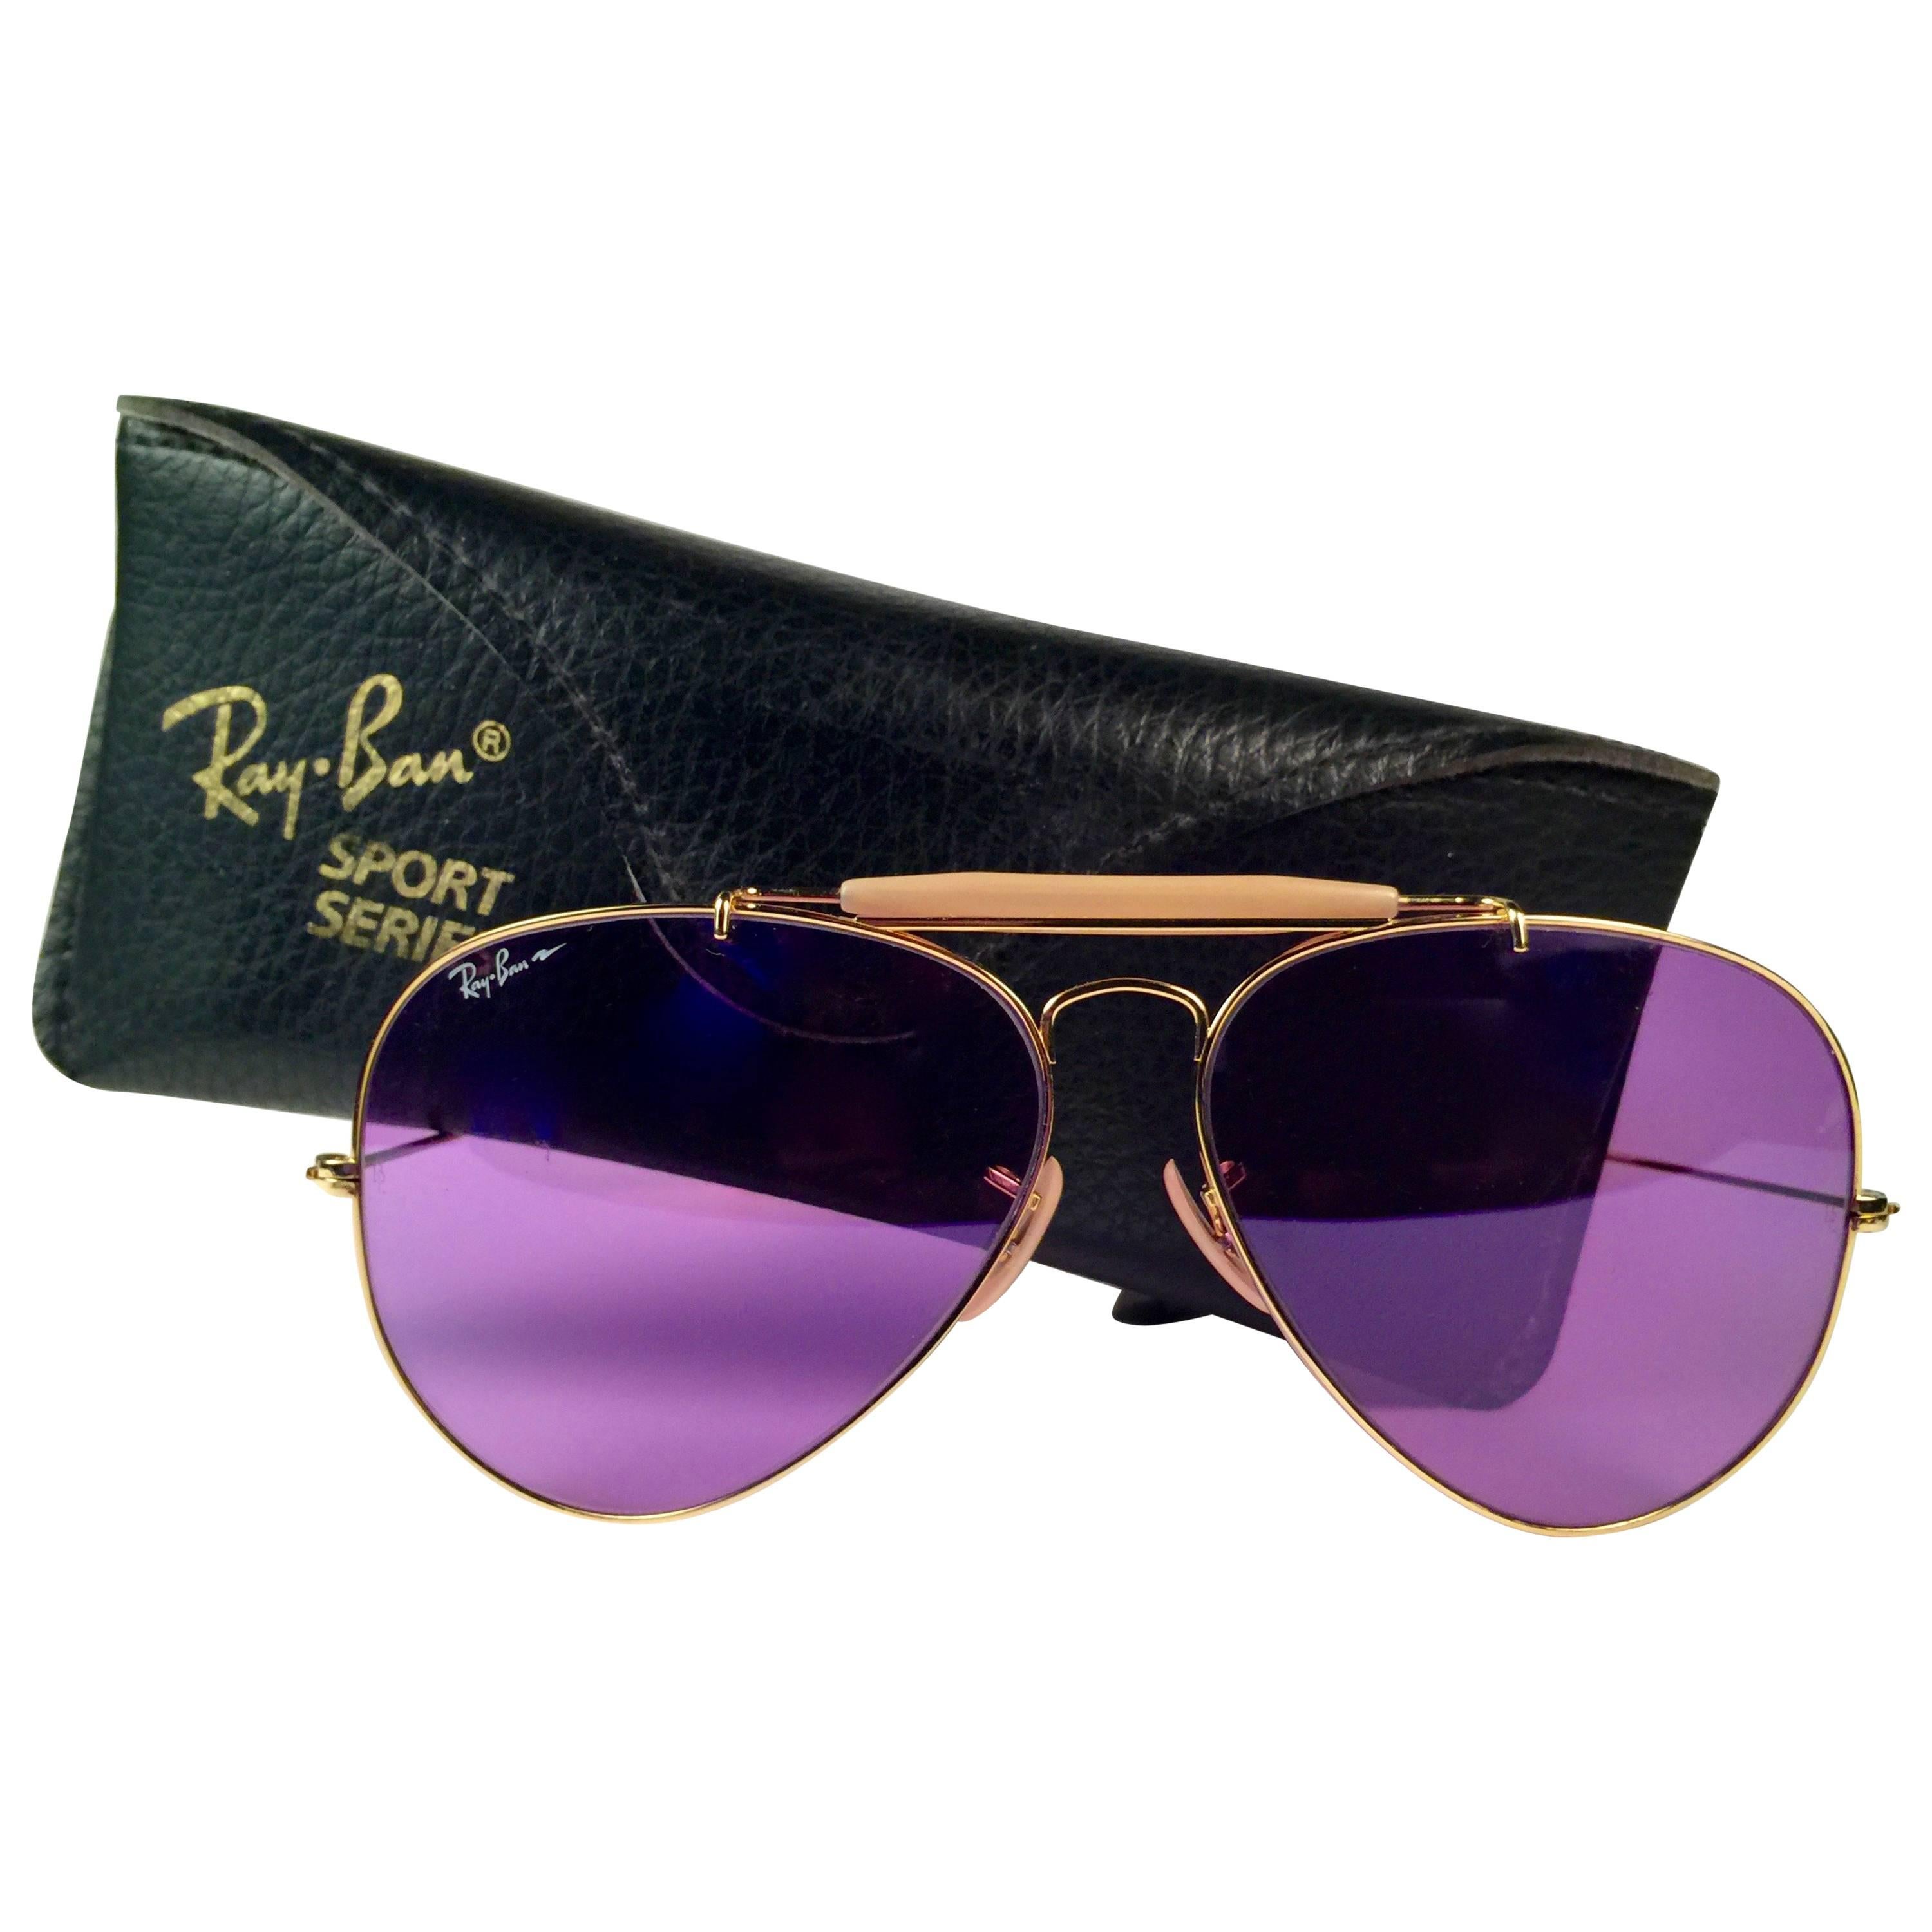 New Ray Ban Purple Chromax 62Mm Outdoorsman Collectors Item USA Sunglasses